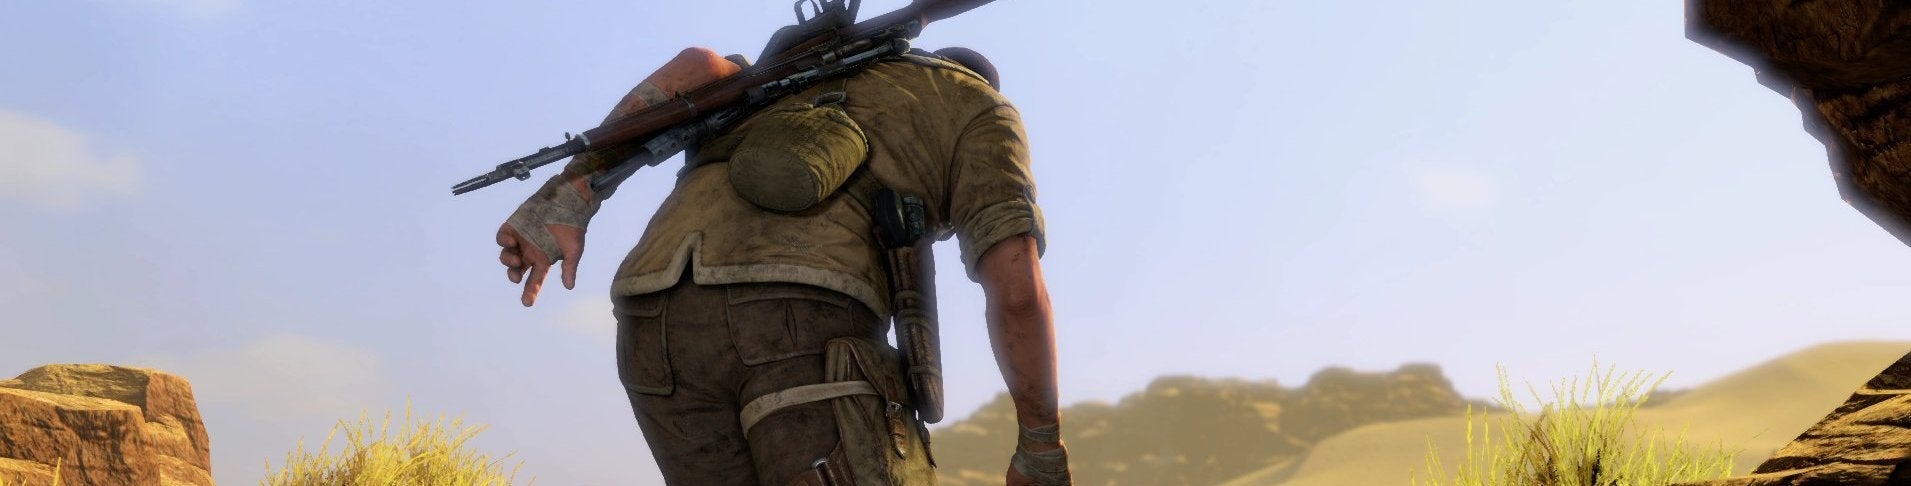 Imagem para Sniper Elite 3 - Análise